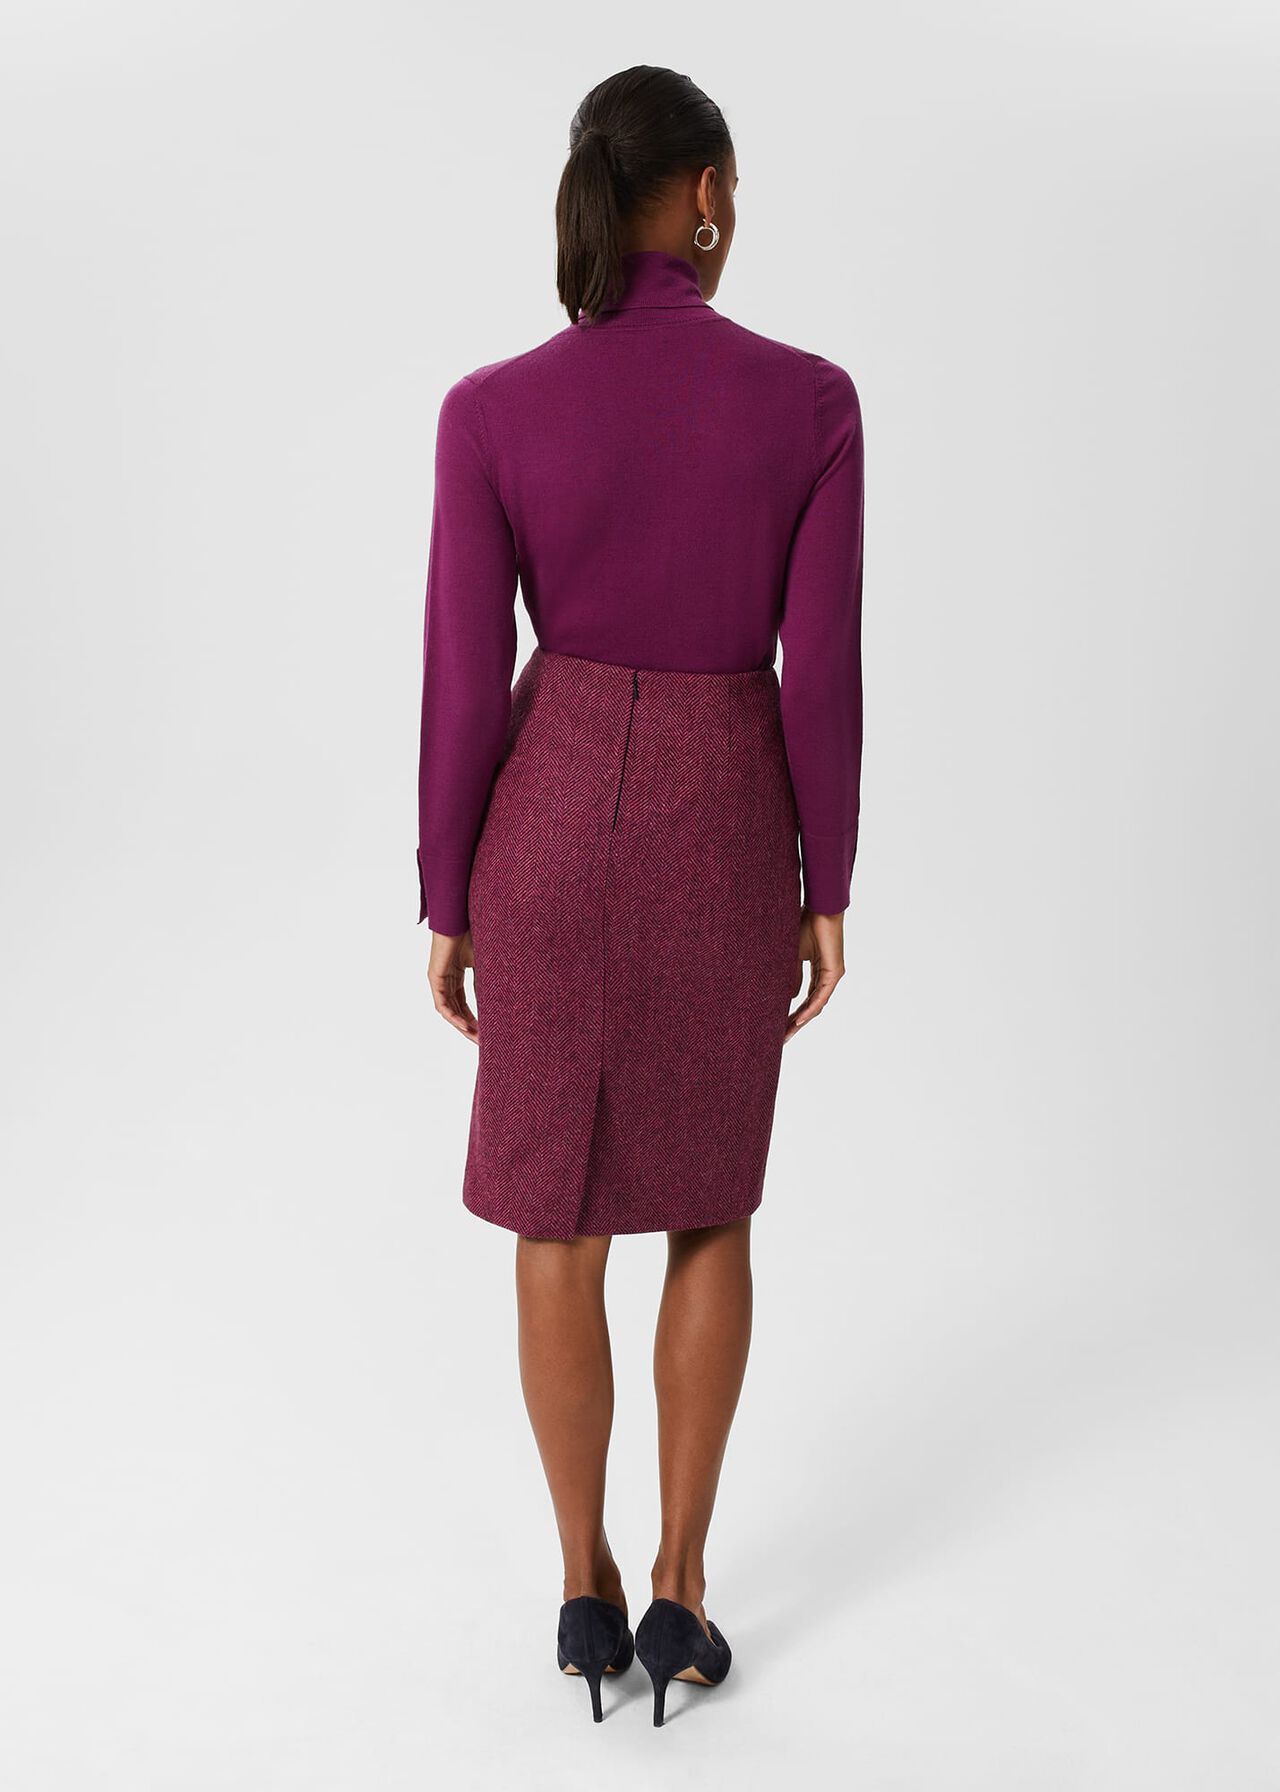 Petite Daphne Wool Skirt, Purple Multi, hi-res